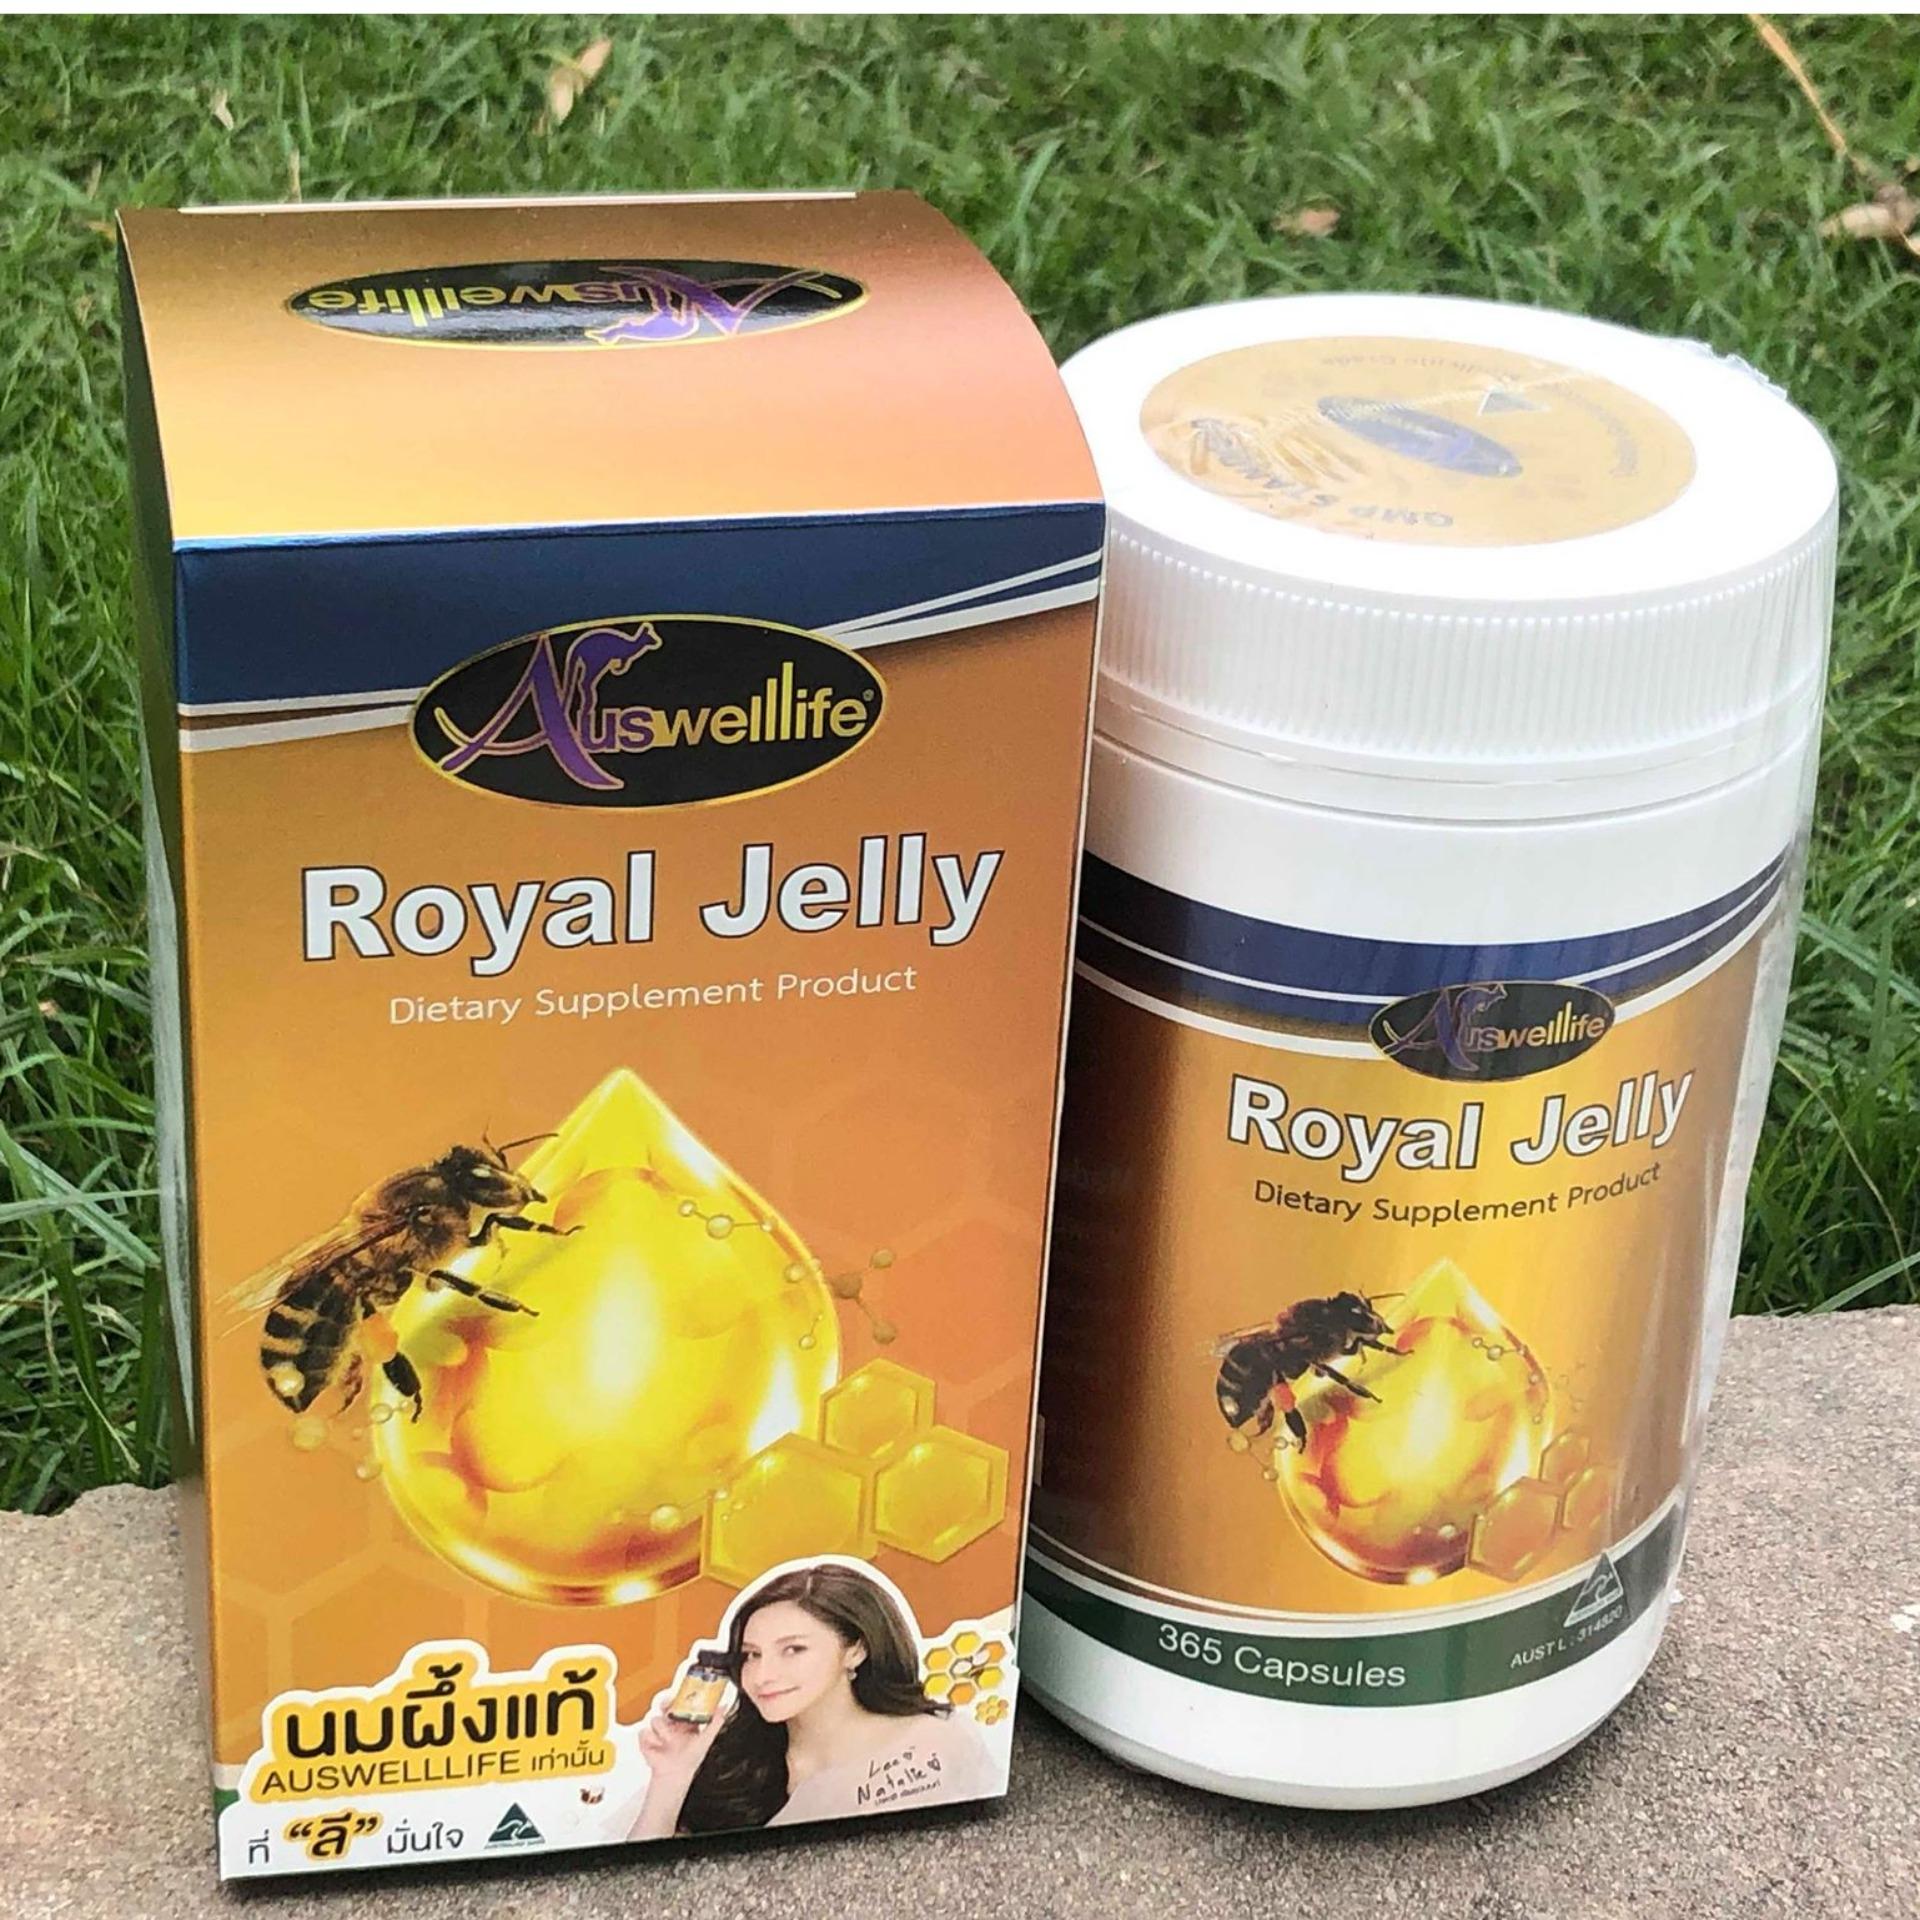 Auswelllife Royal Jelly นมผึ้งเกรดพรีเมี่ยม 100!80mg บำรุงประสาทและสมอง ต้านความเครียด นอนไม่หลับ 1 กระปุก (365 แคปซูล) ทานได้ 1 ปี